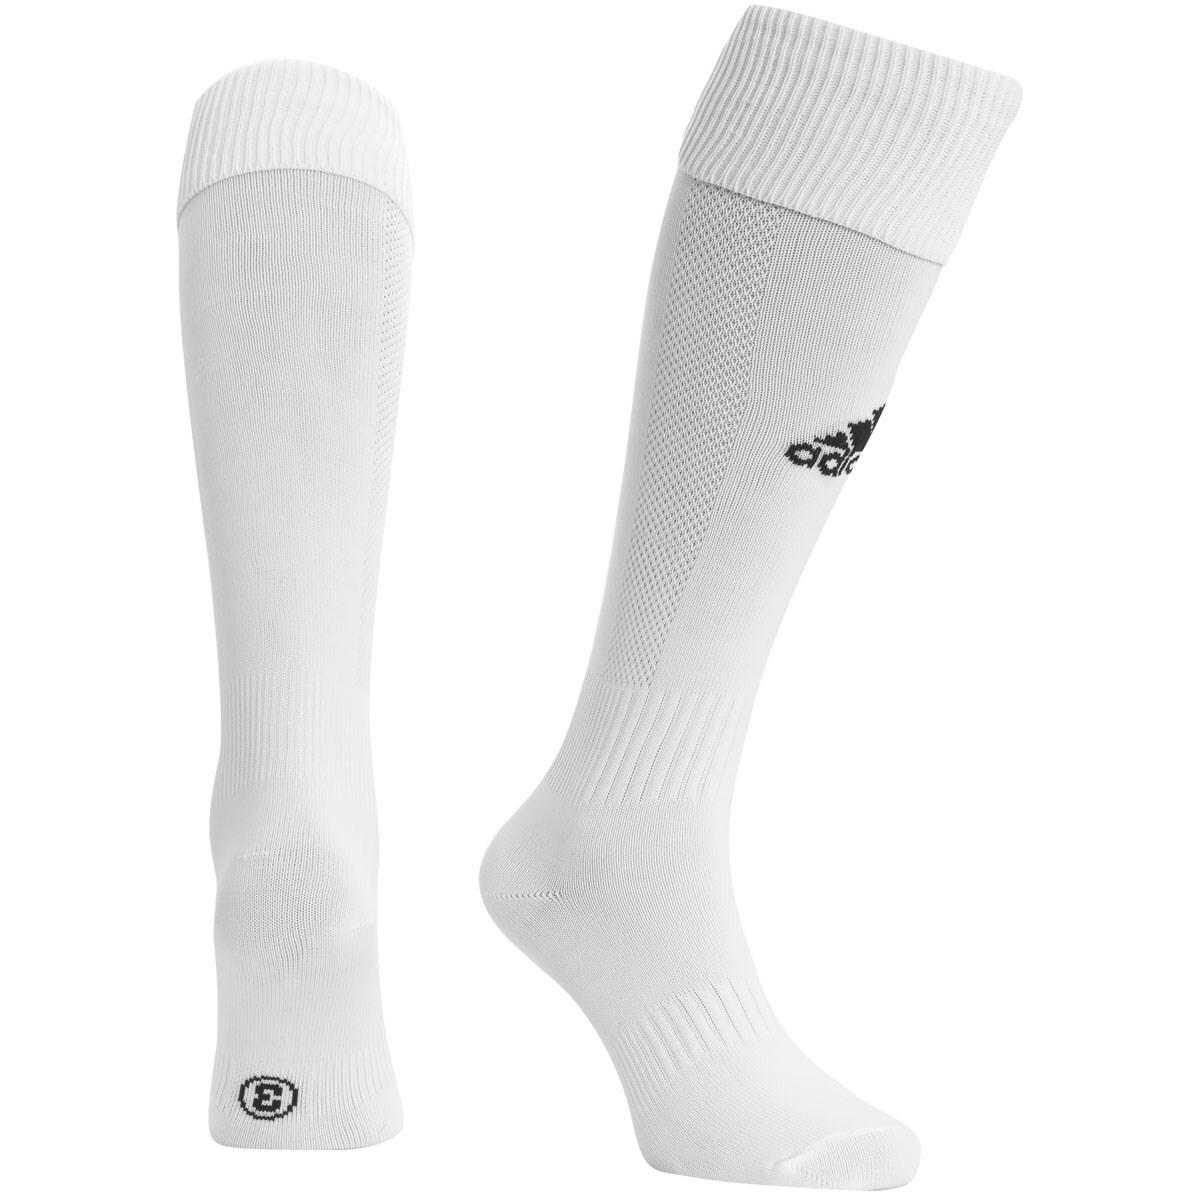 Gioca Grip Socks (Navy) - The Football Factory